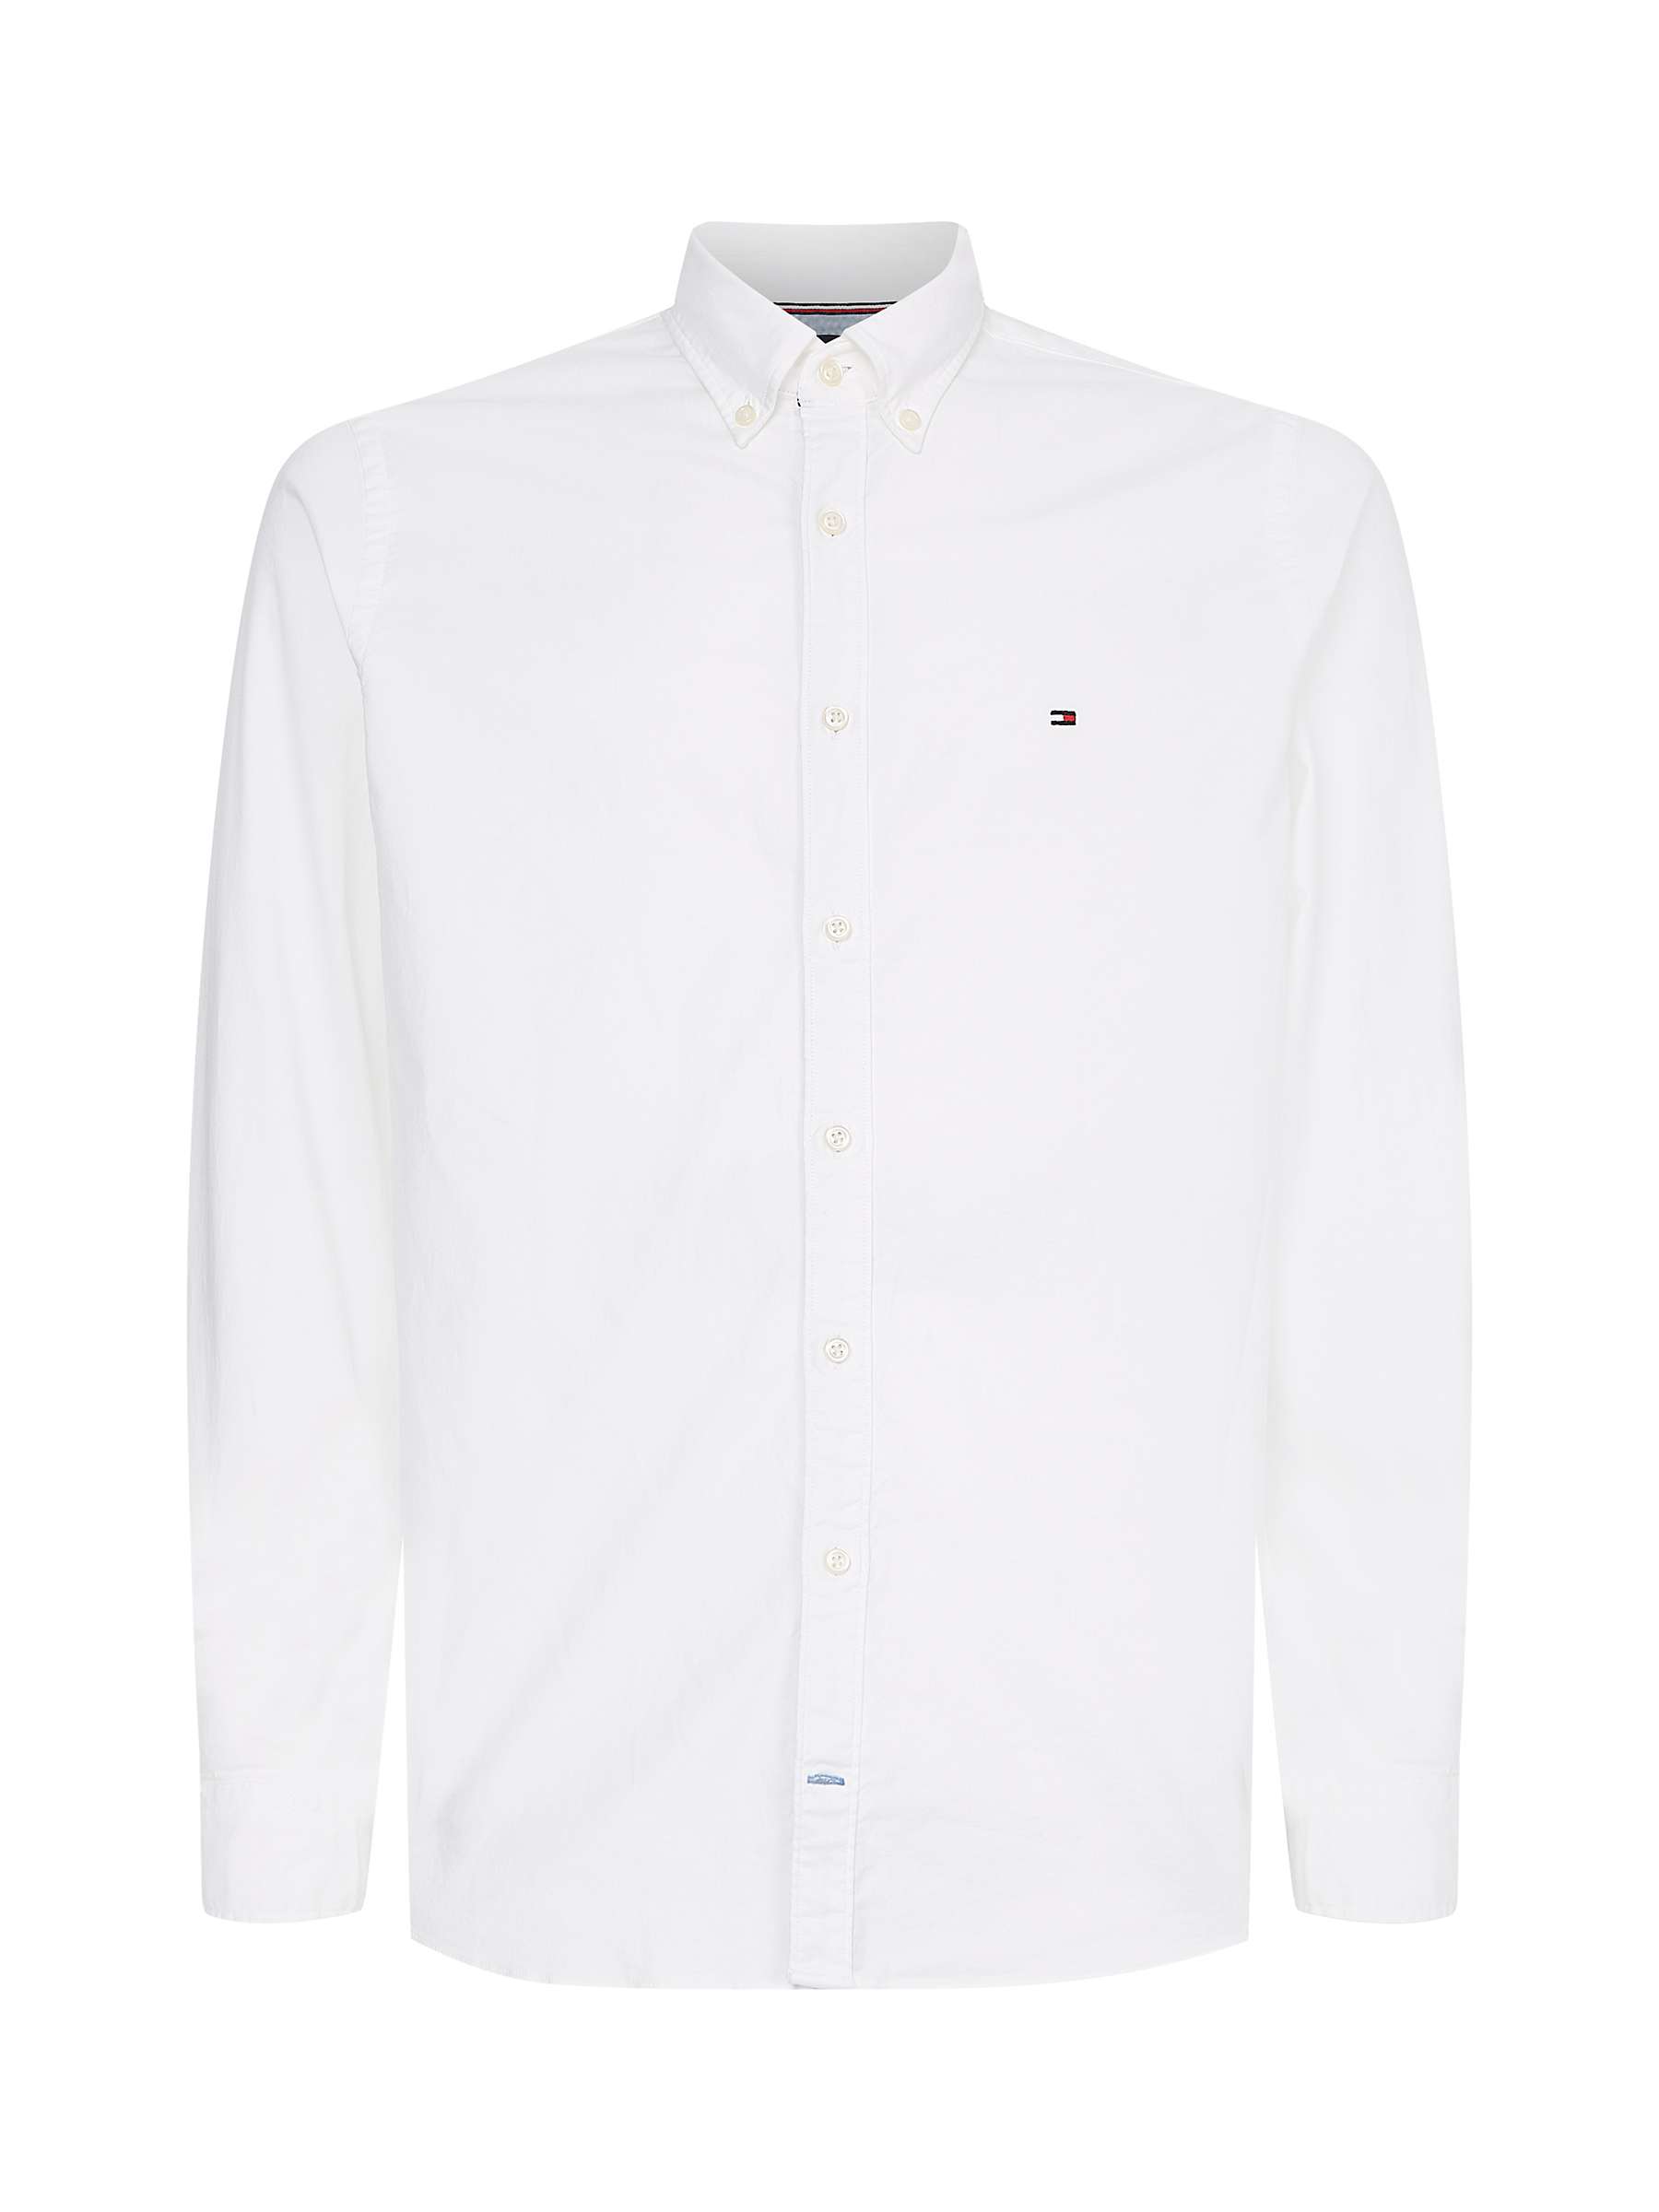 Tommy Hilfiger Slim Cotton Oxford Shirt, Bright White at John Lewis ...